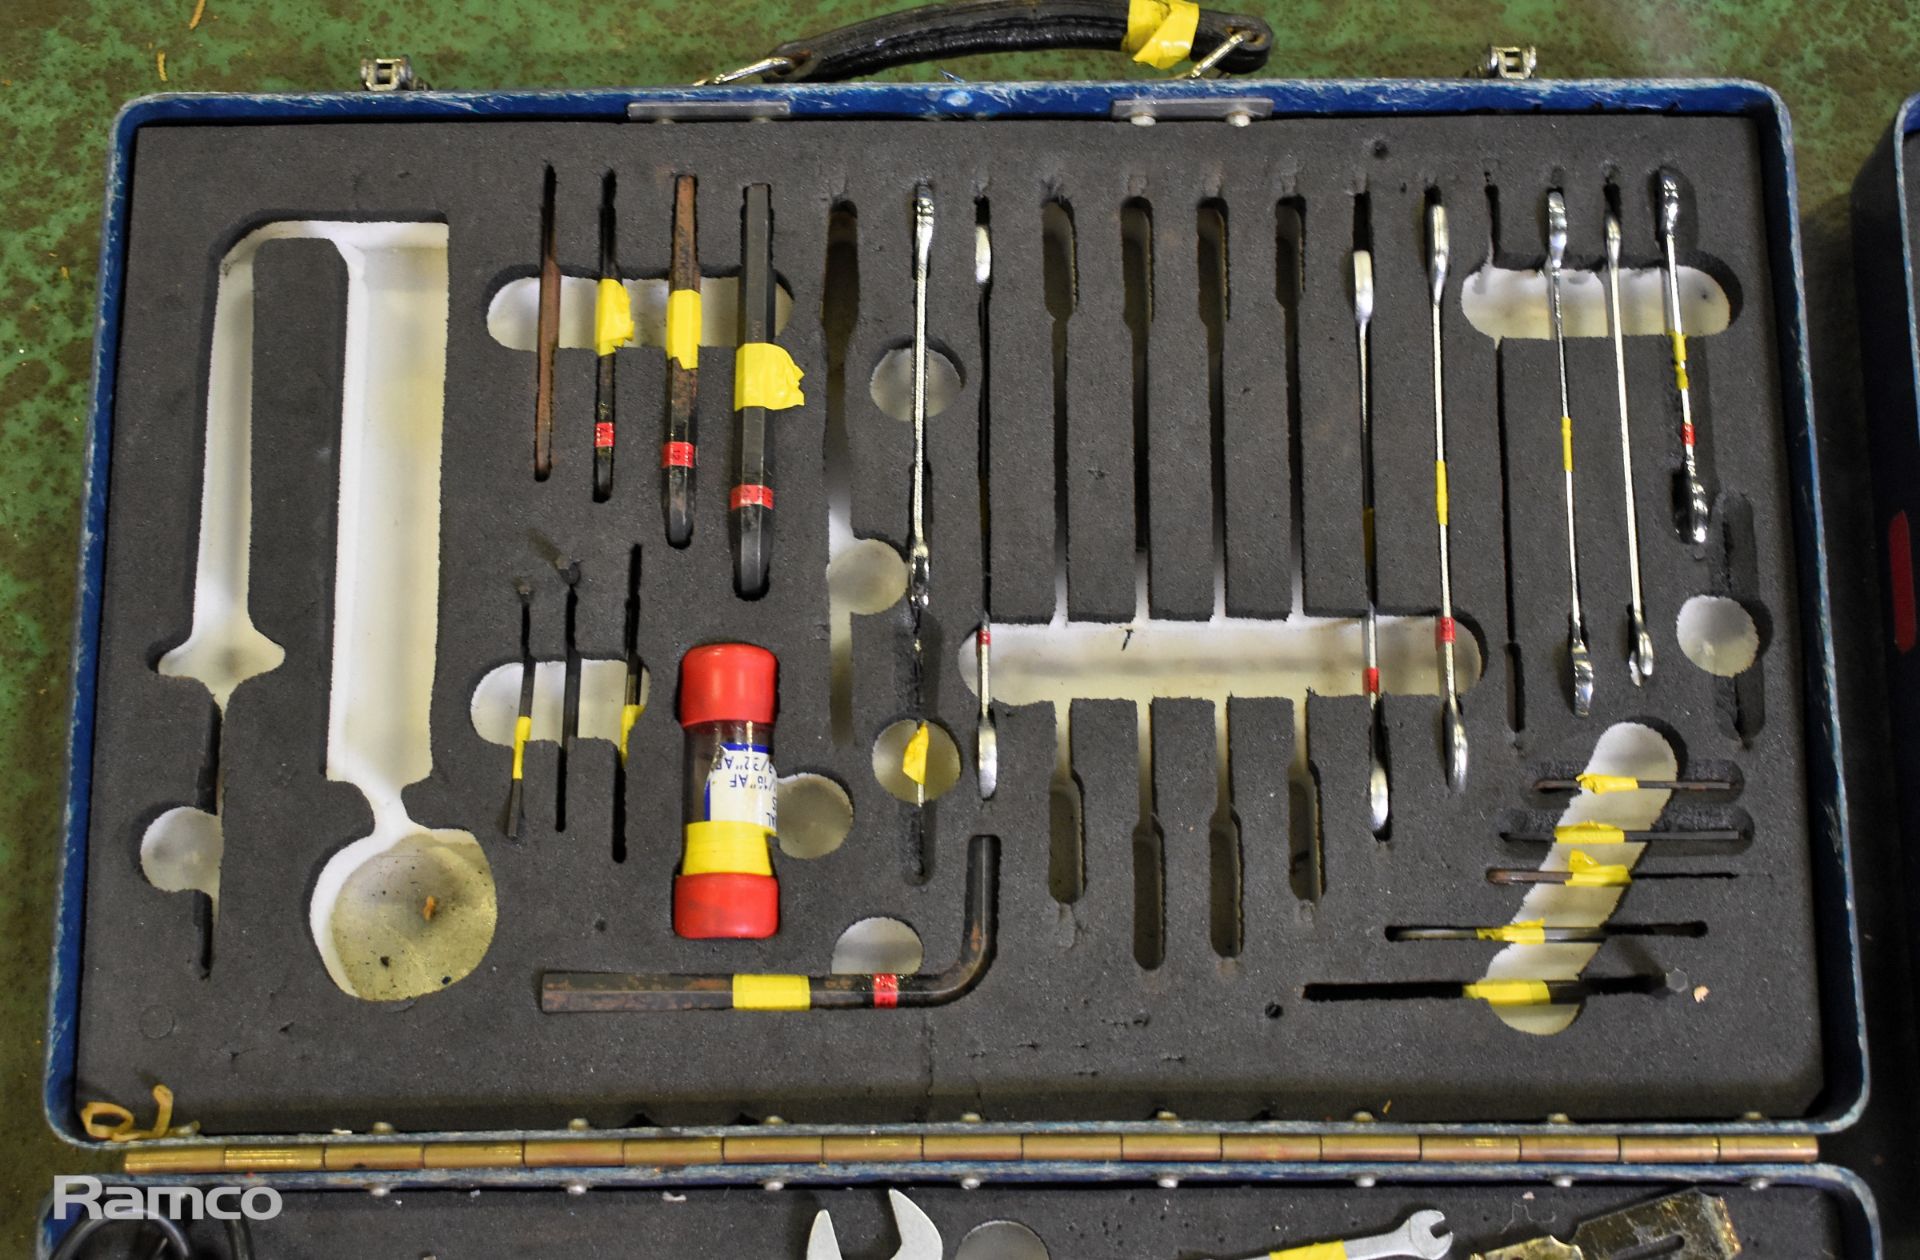 2x Multi piece tool kits in composite case - spanners, screwdrivers, allen keys, pliers - Bild 2 aus 7